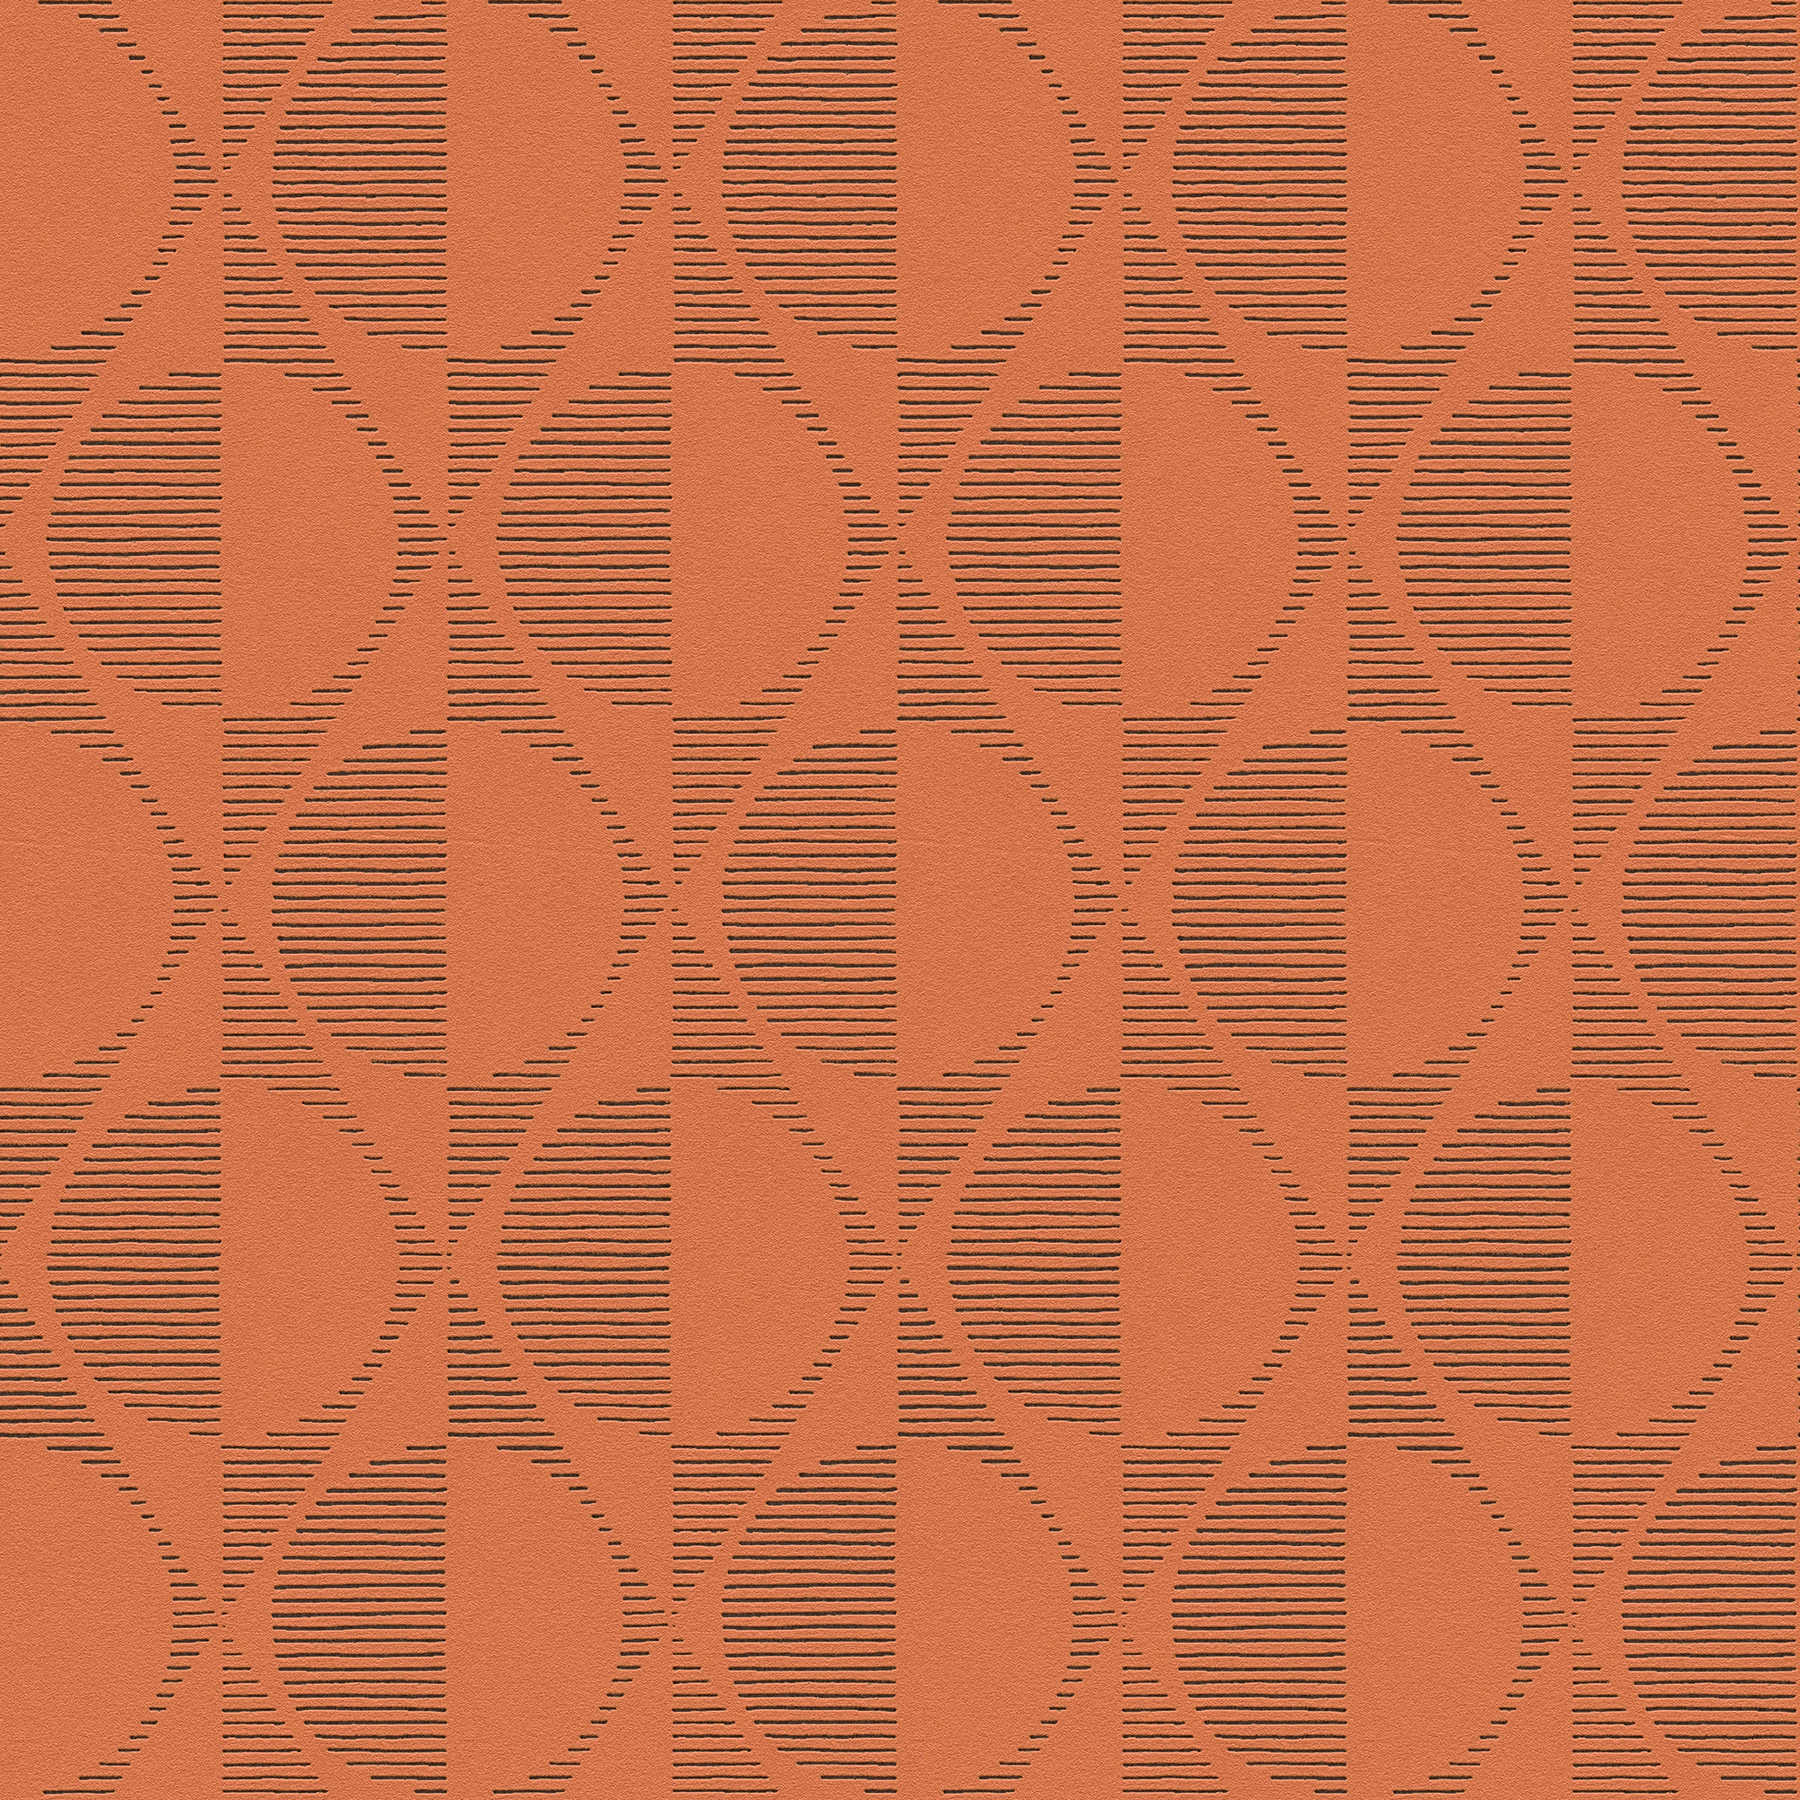 Retro wallpaper with circle and diamond pattern - orange, black
